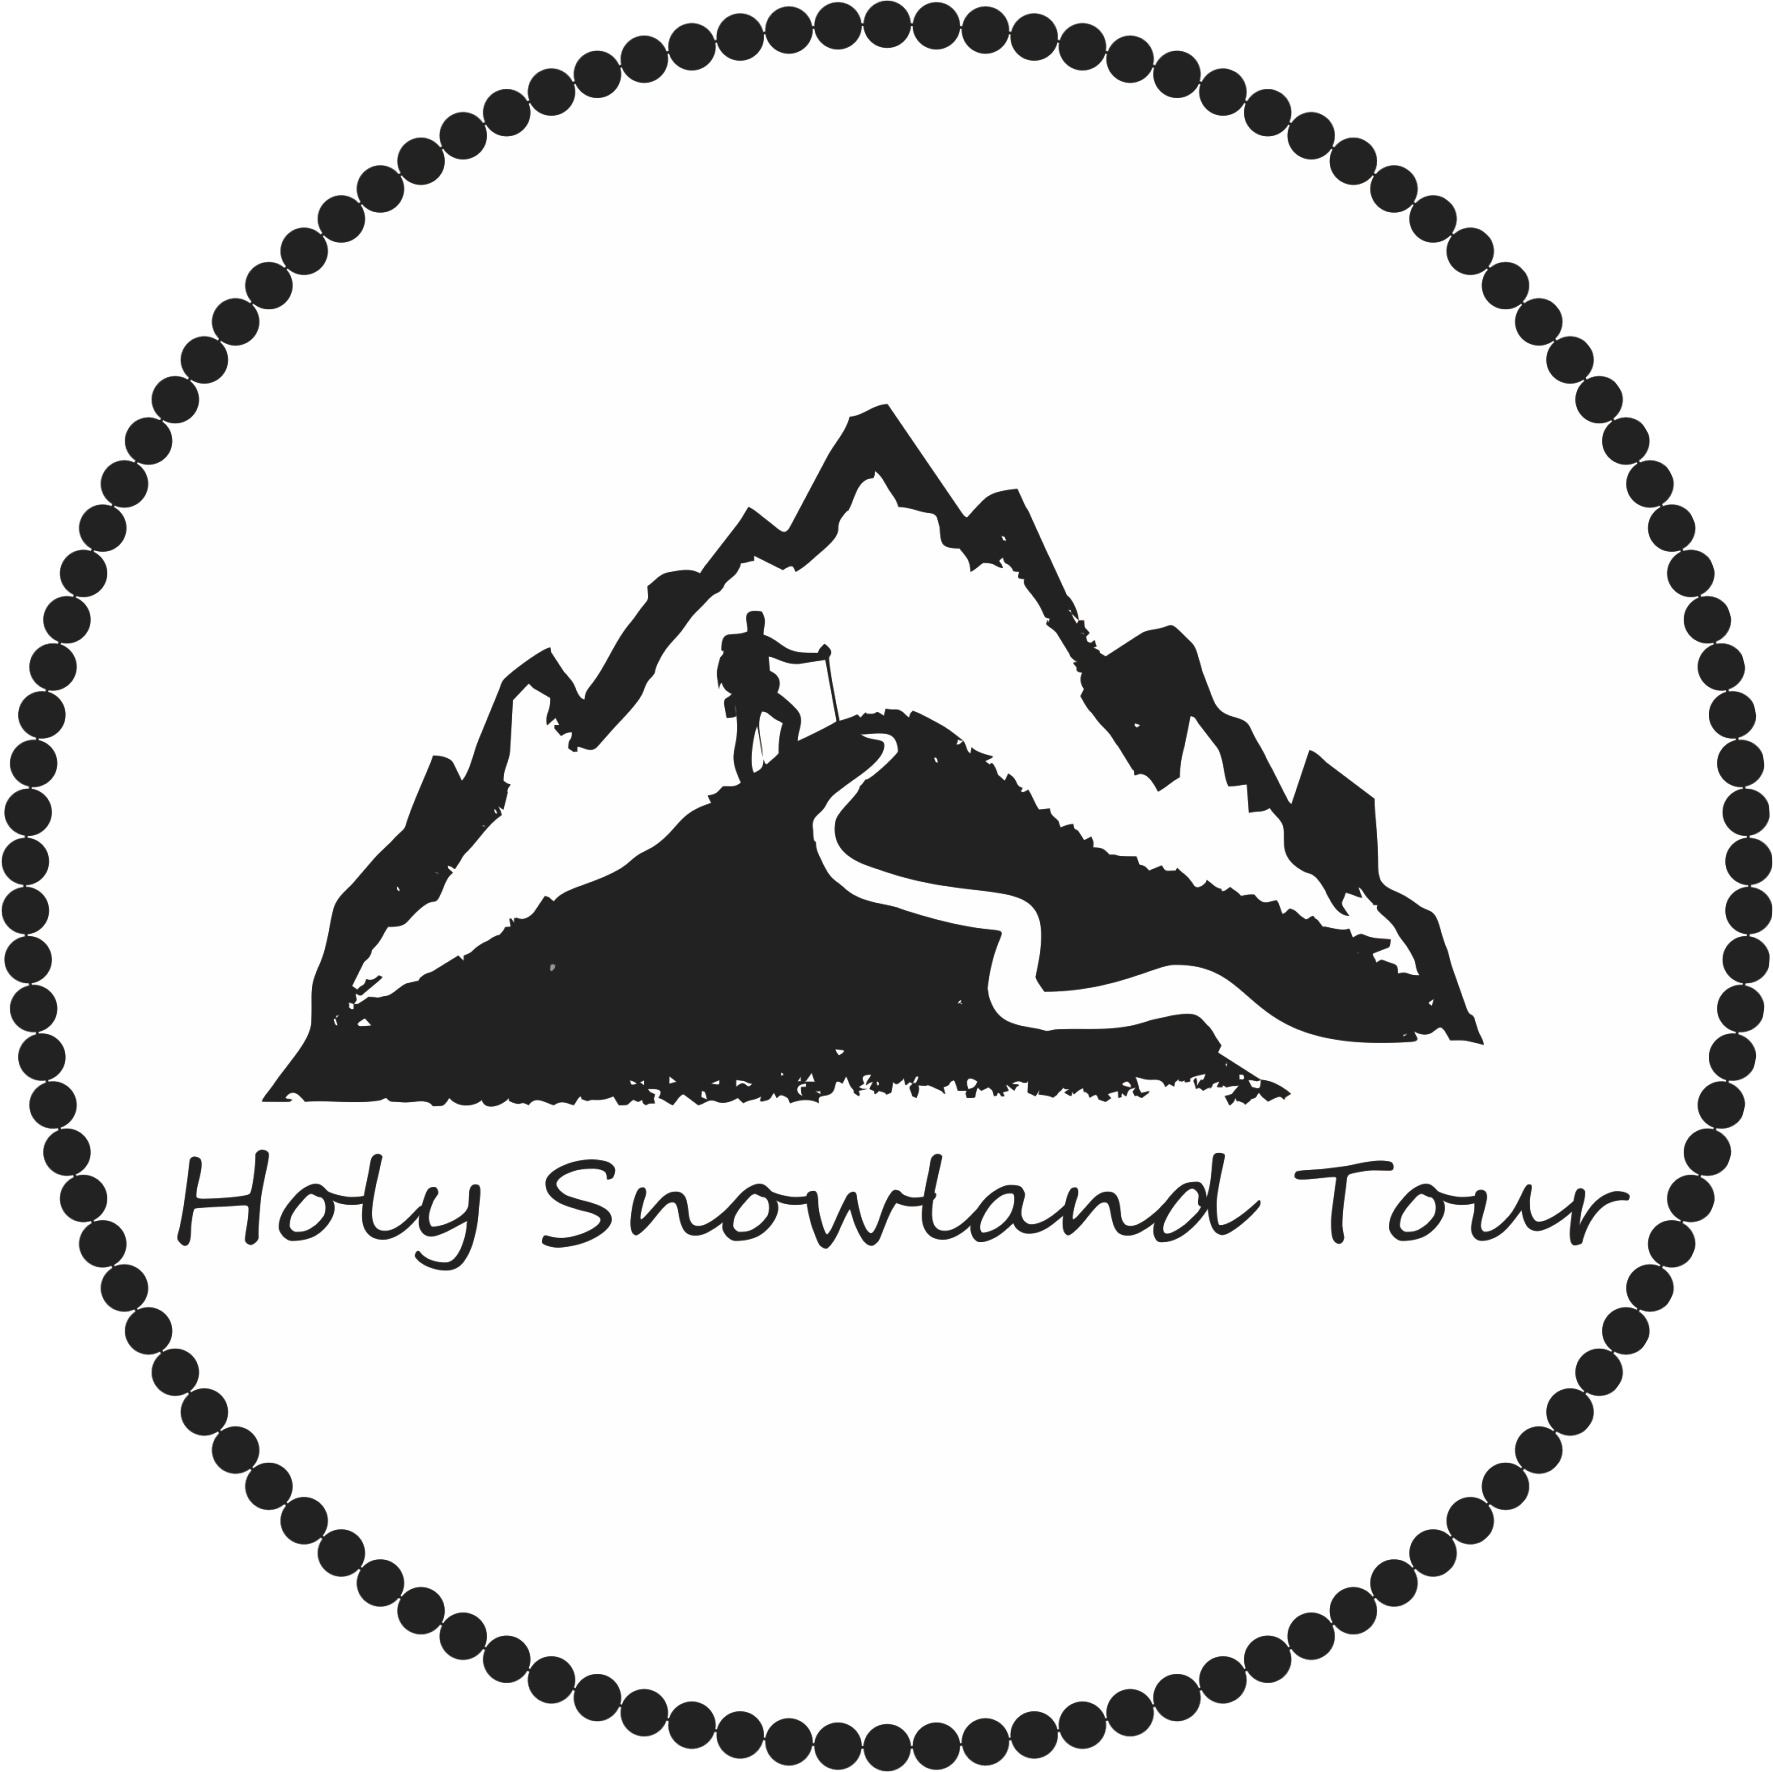 Holy Snowland Tour